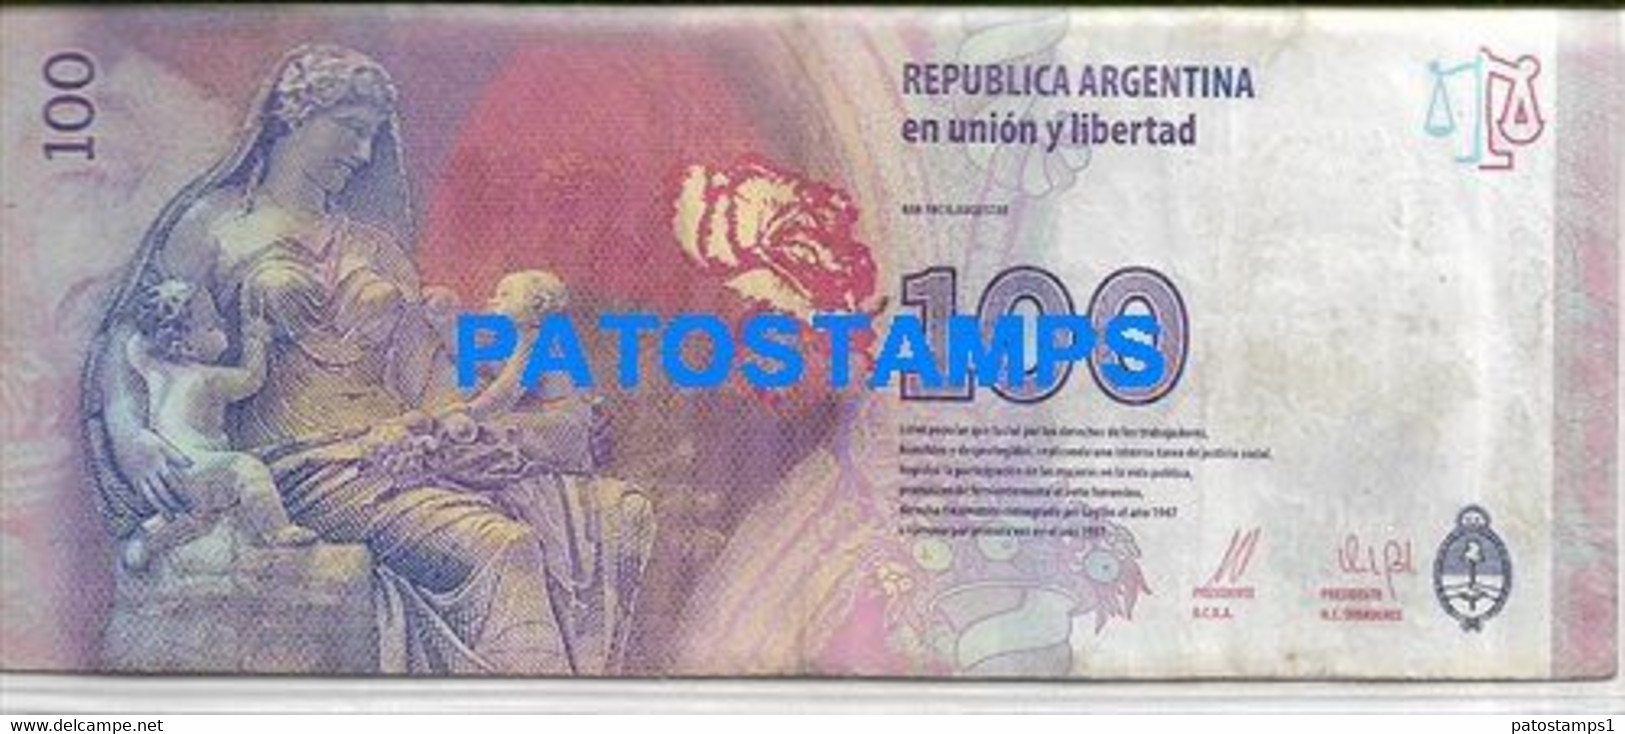 180817 ARGENTINA BILLETE ORIGINAL $ 100 R REPOSICION EVA EVITA PERON NO POSTAL POSTCARD - Other - America